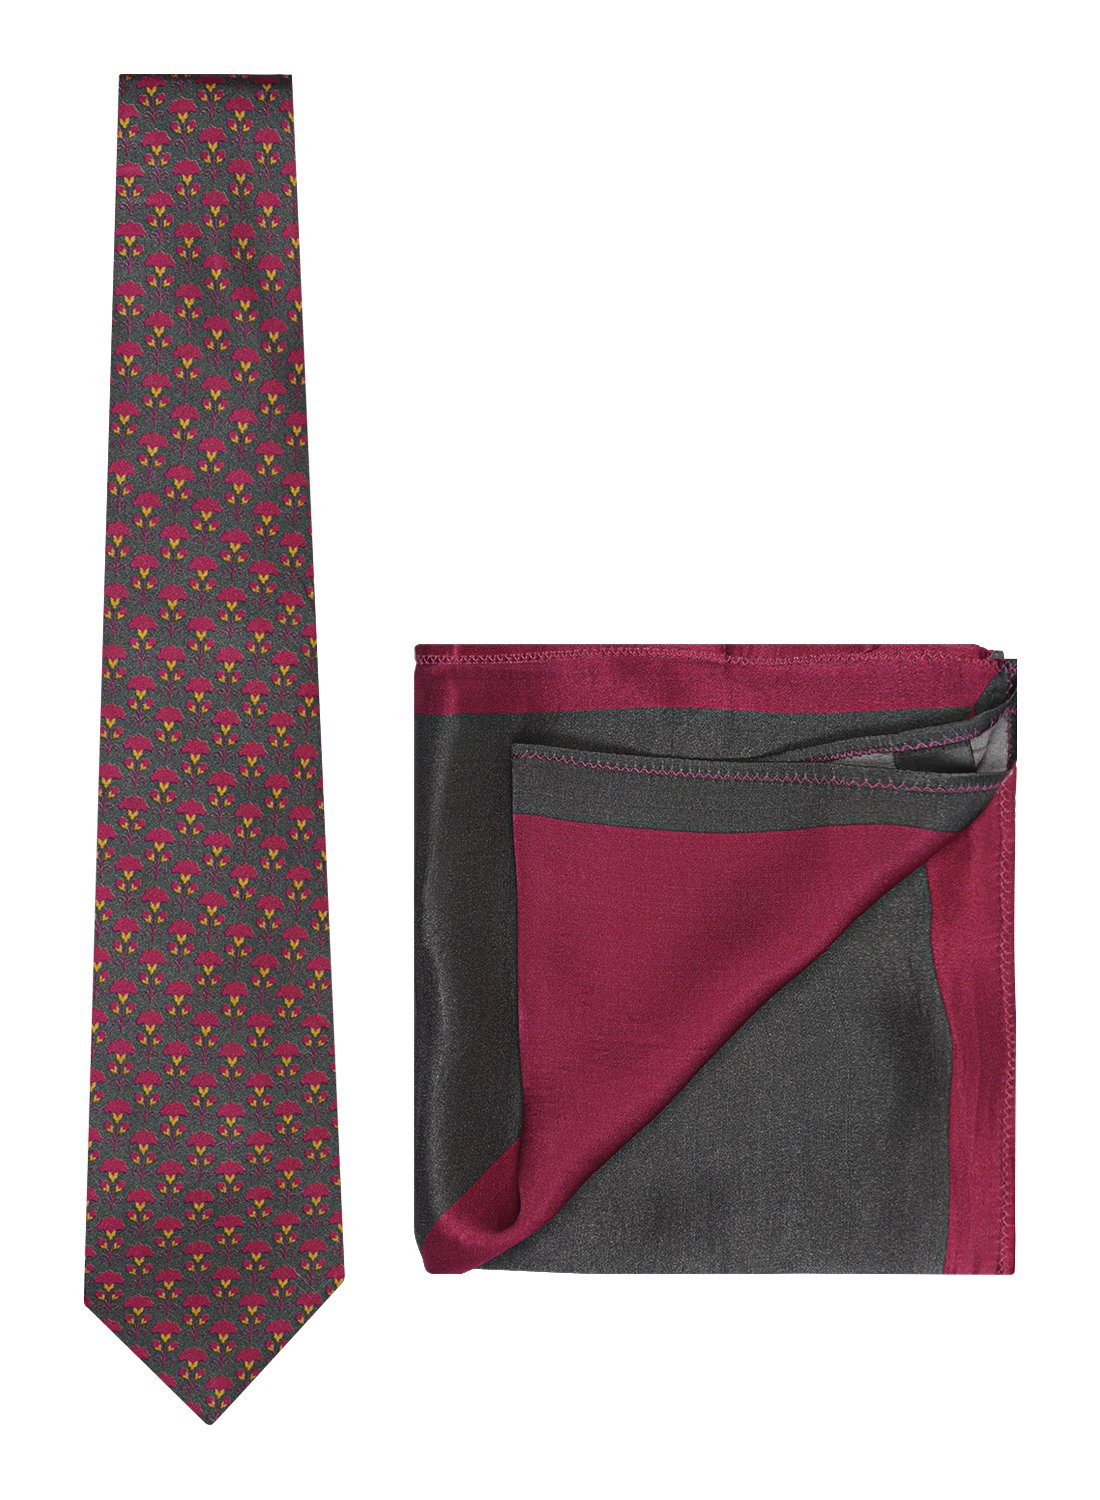 Chokore Grey & Magenta Silk Tie from Indian At Heart range & Two-in-one Dark Grey & Wine Pink Silk Pocket Square set